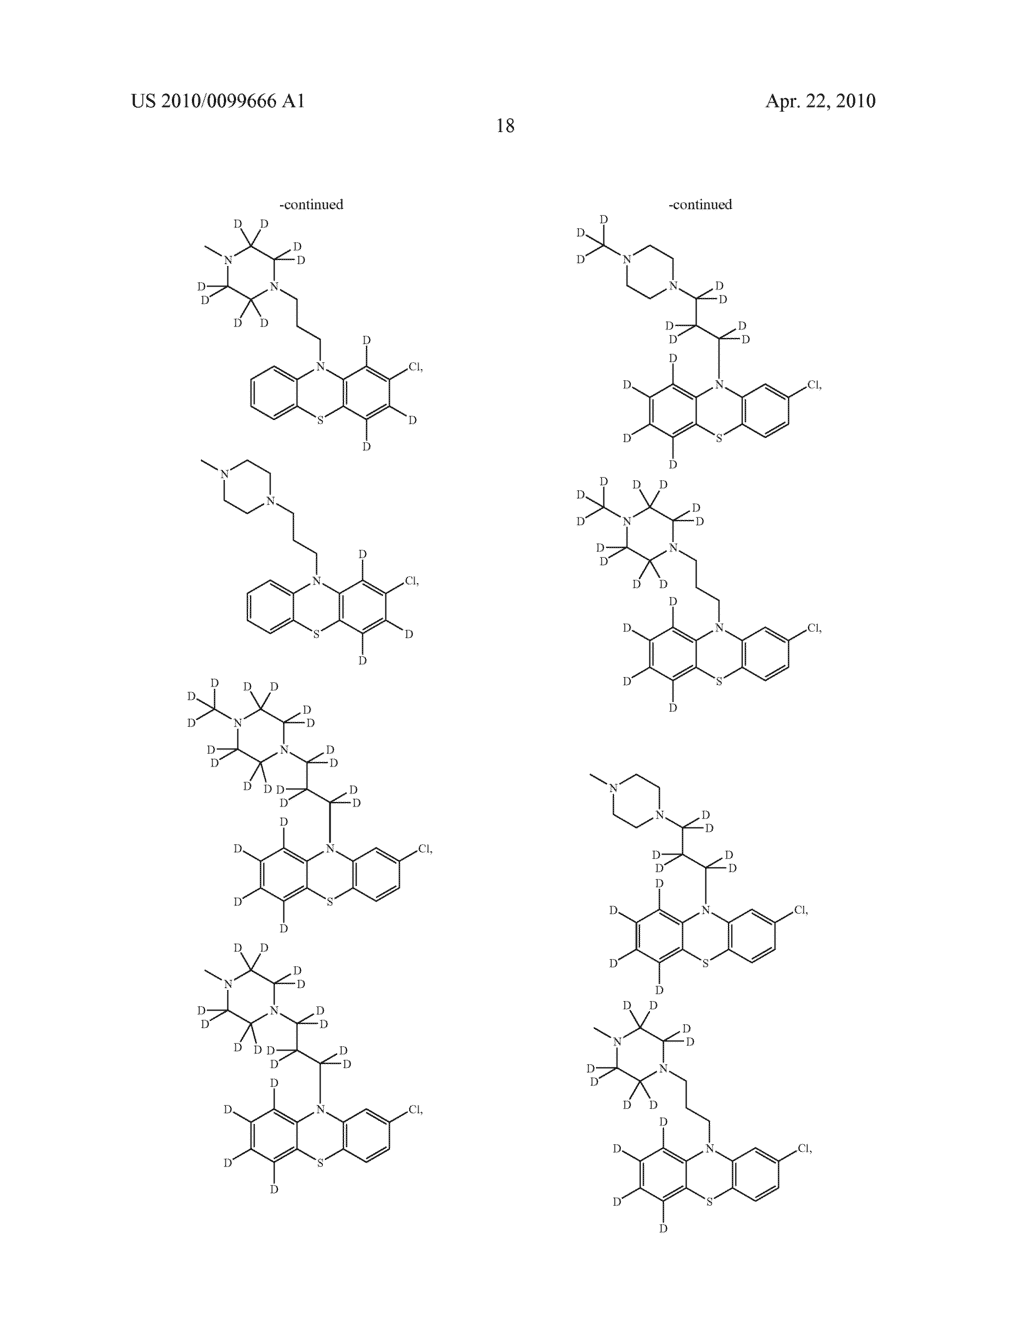 PHENOTHIAZINE MODULATORS OF H1 RECEPTOR AND D2 RECEPTOR - diagram, schematic, and image 19